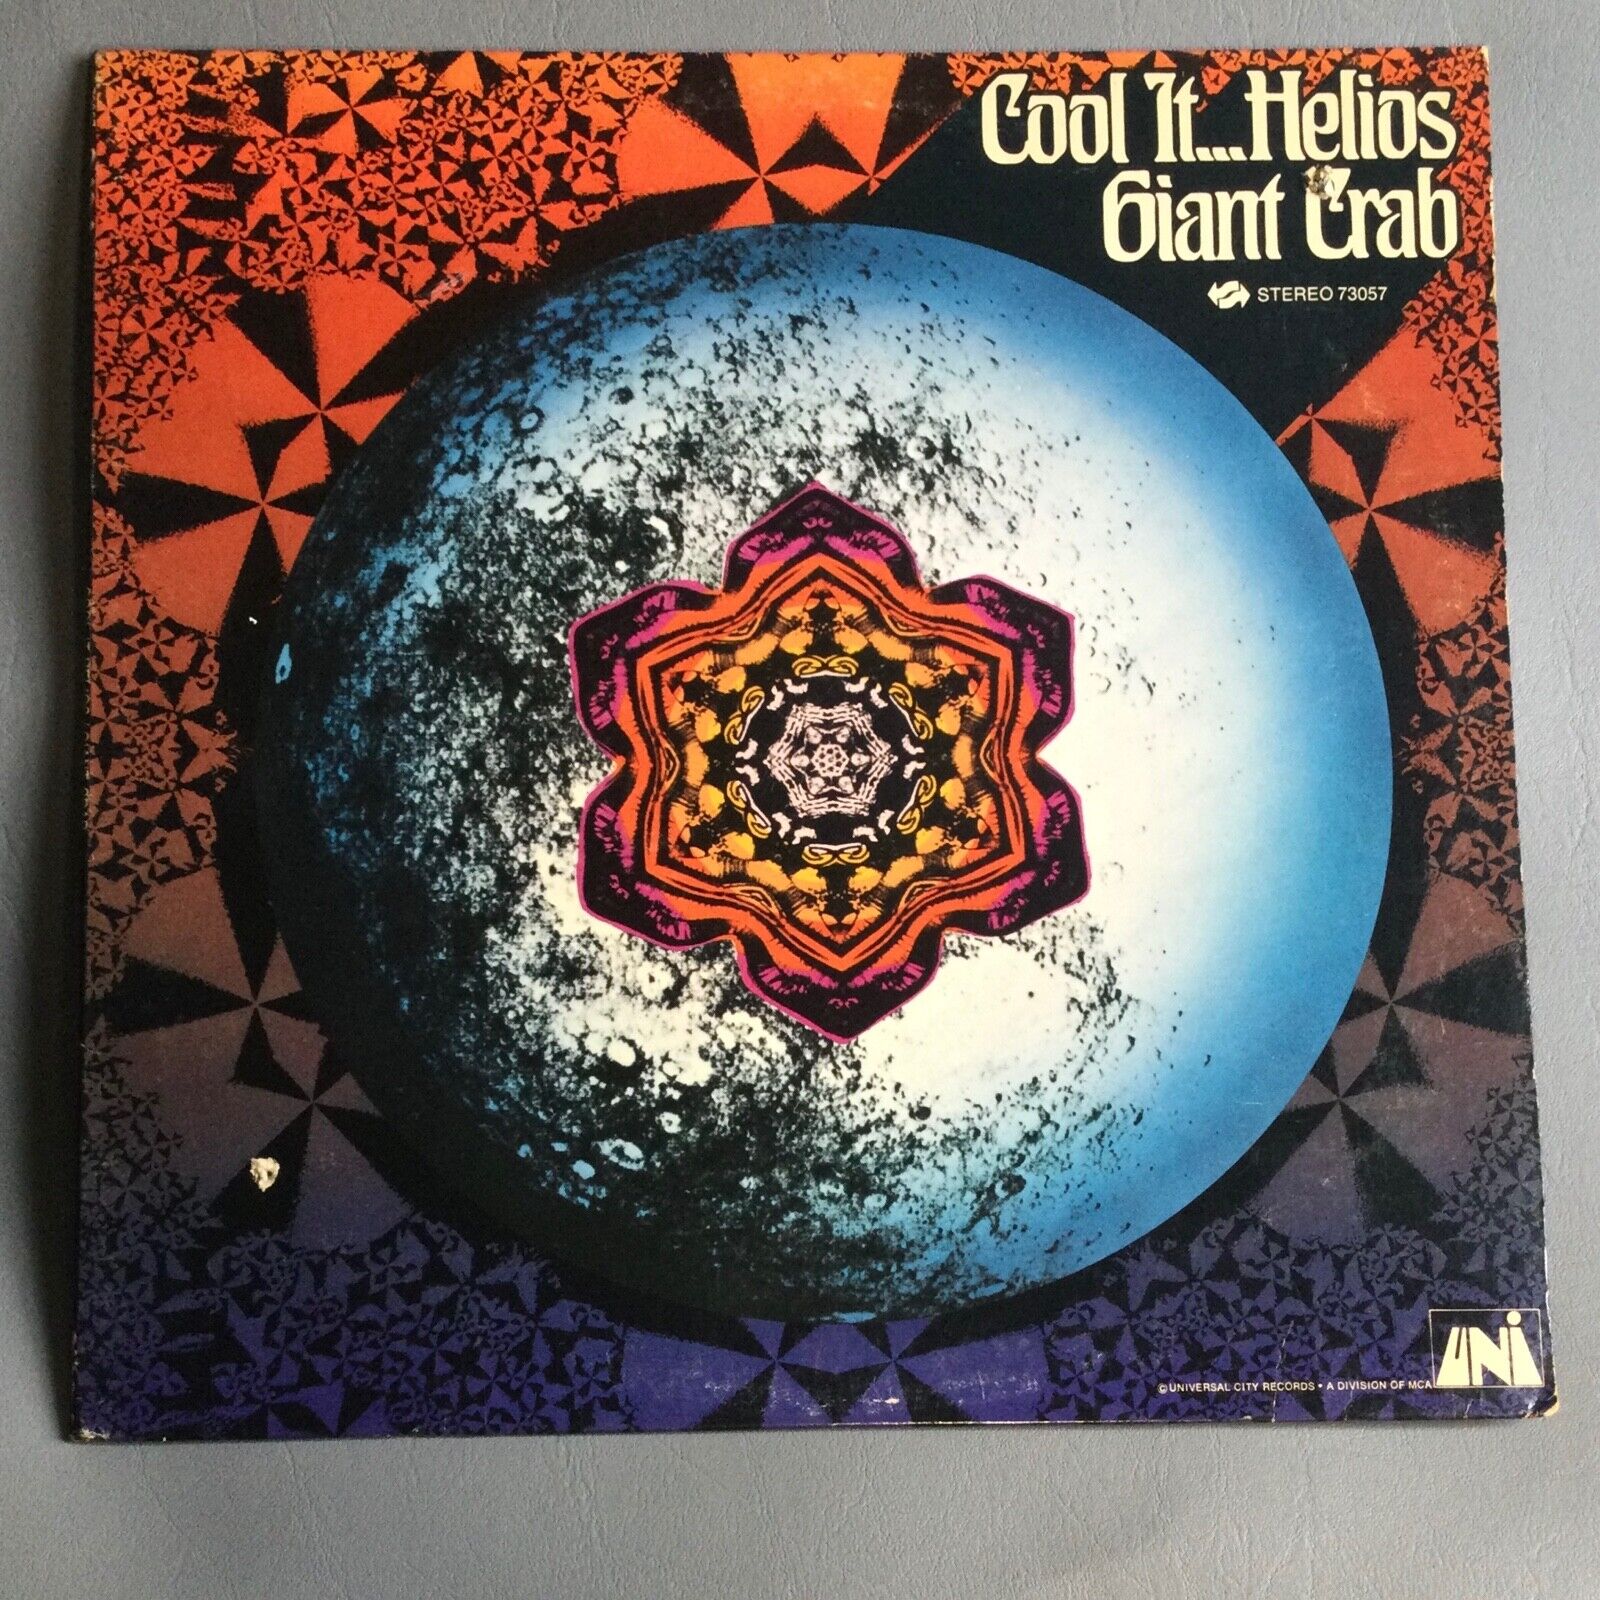 Giant Crab / Cool It...Helios - Classic Psychedelic Rock - UNI Original LP 1969